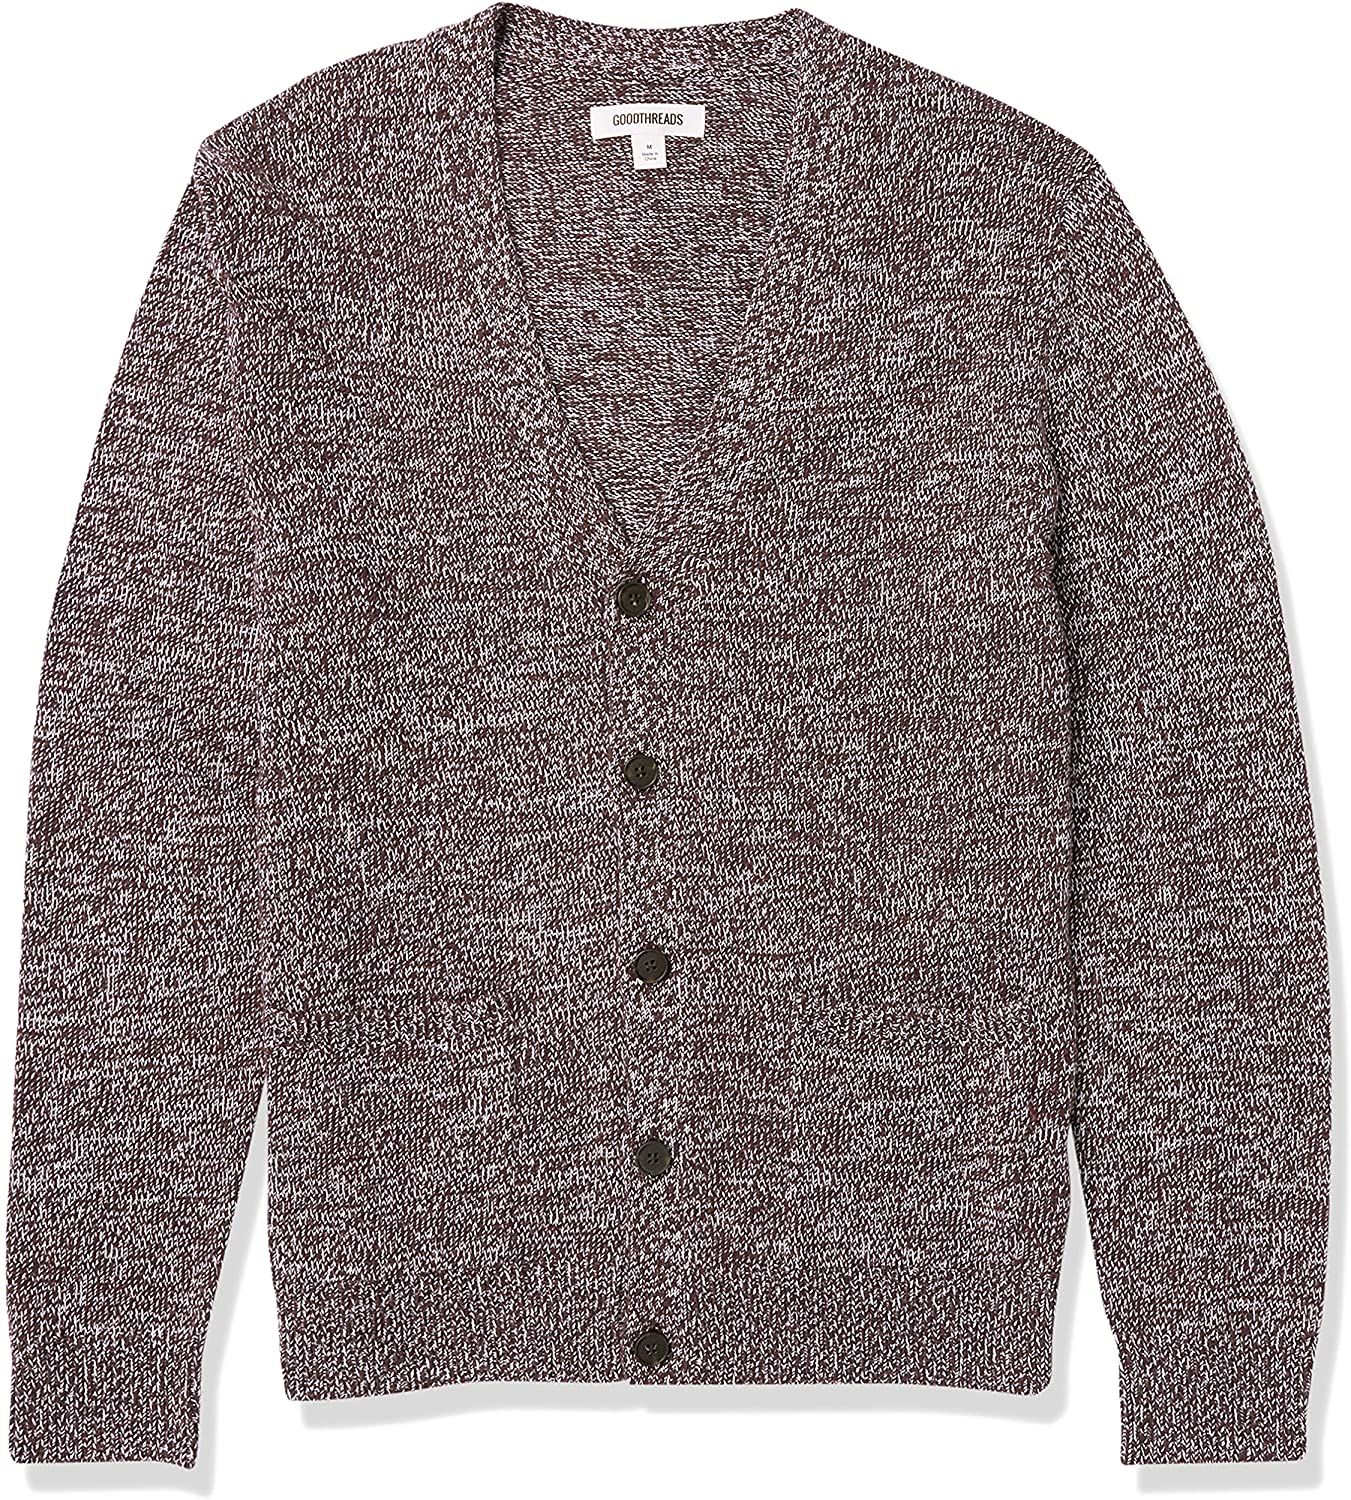 Marke Goodthreads Herren Supersoft Marled Cardigan Sweater 